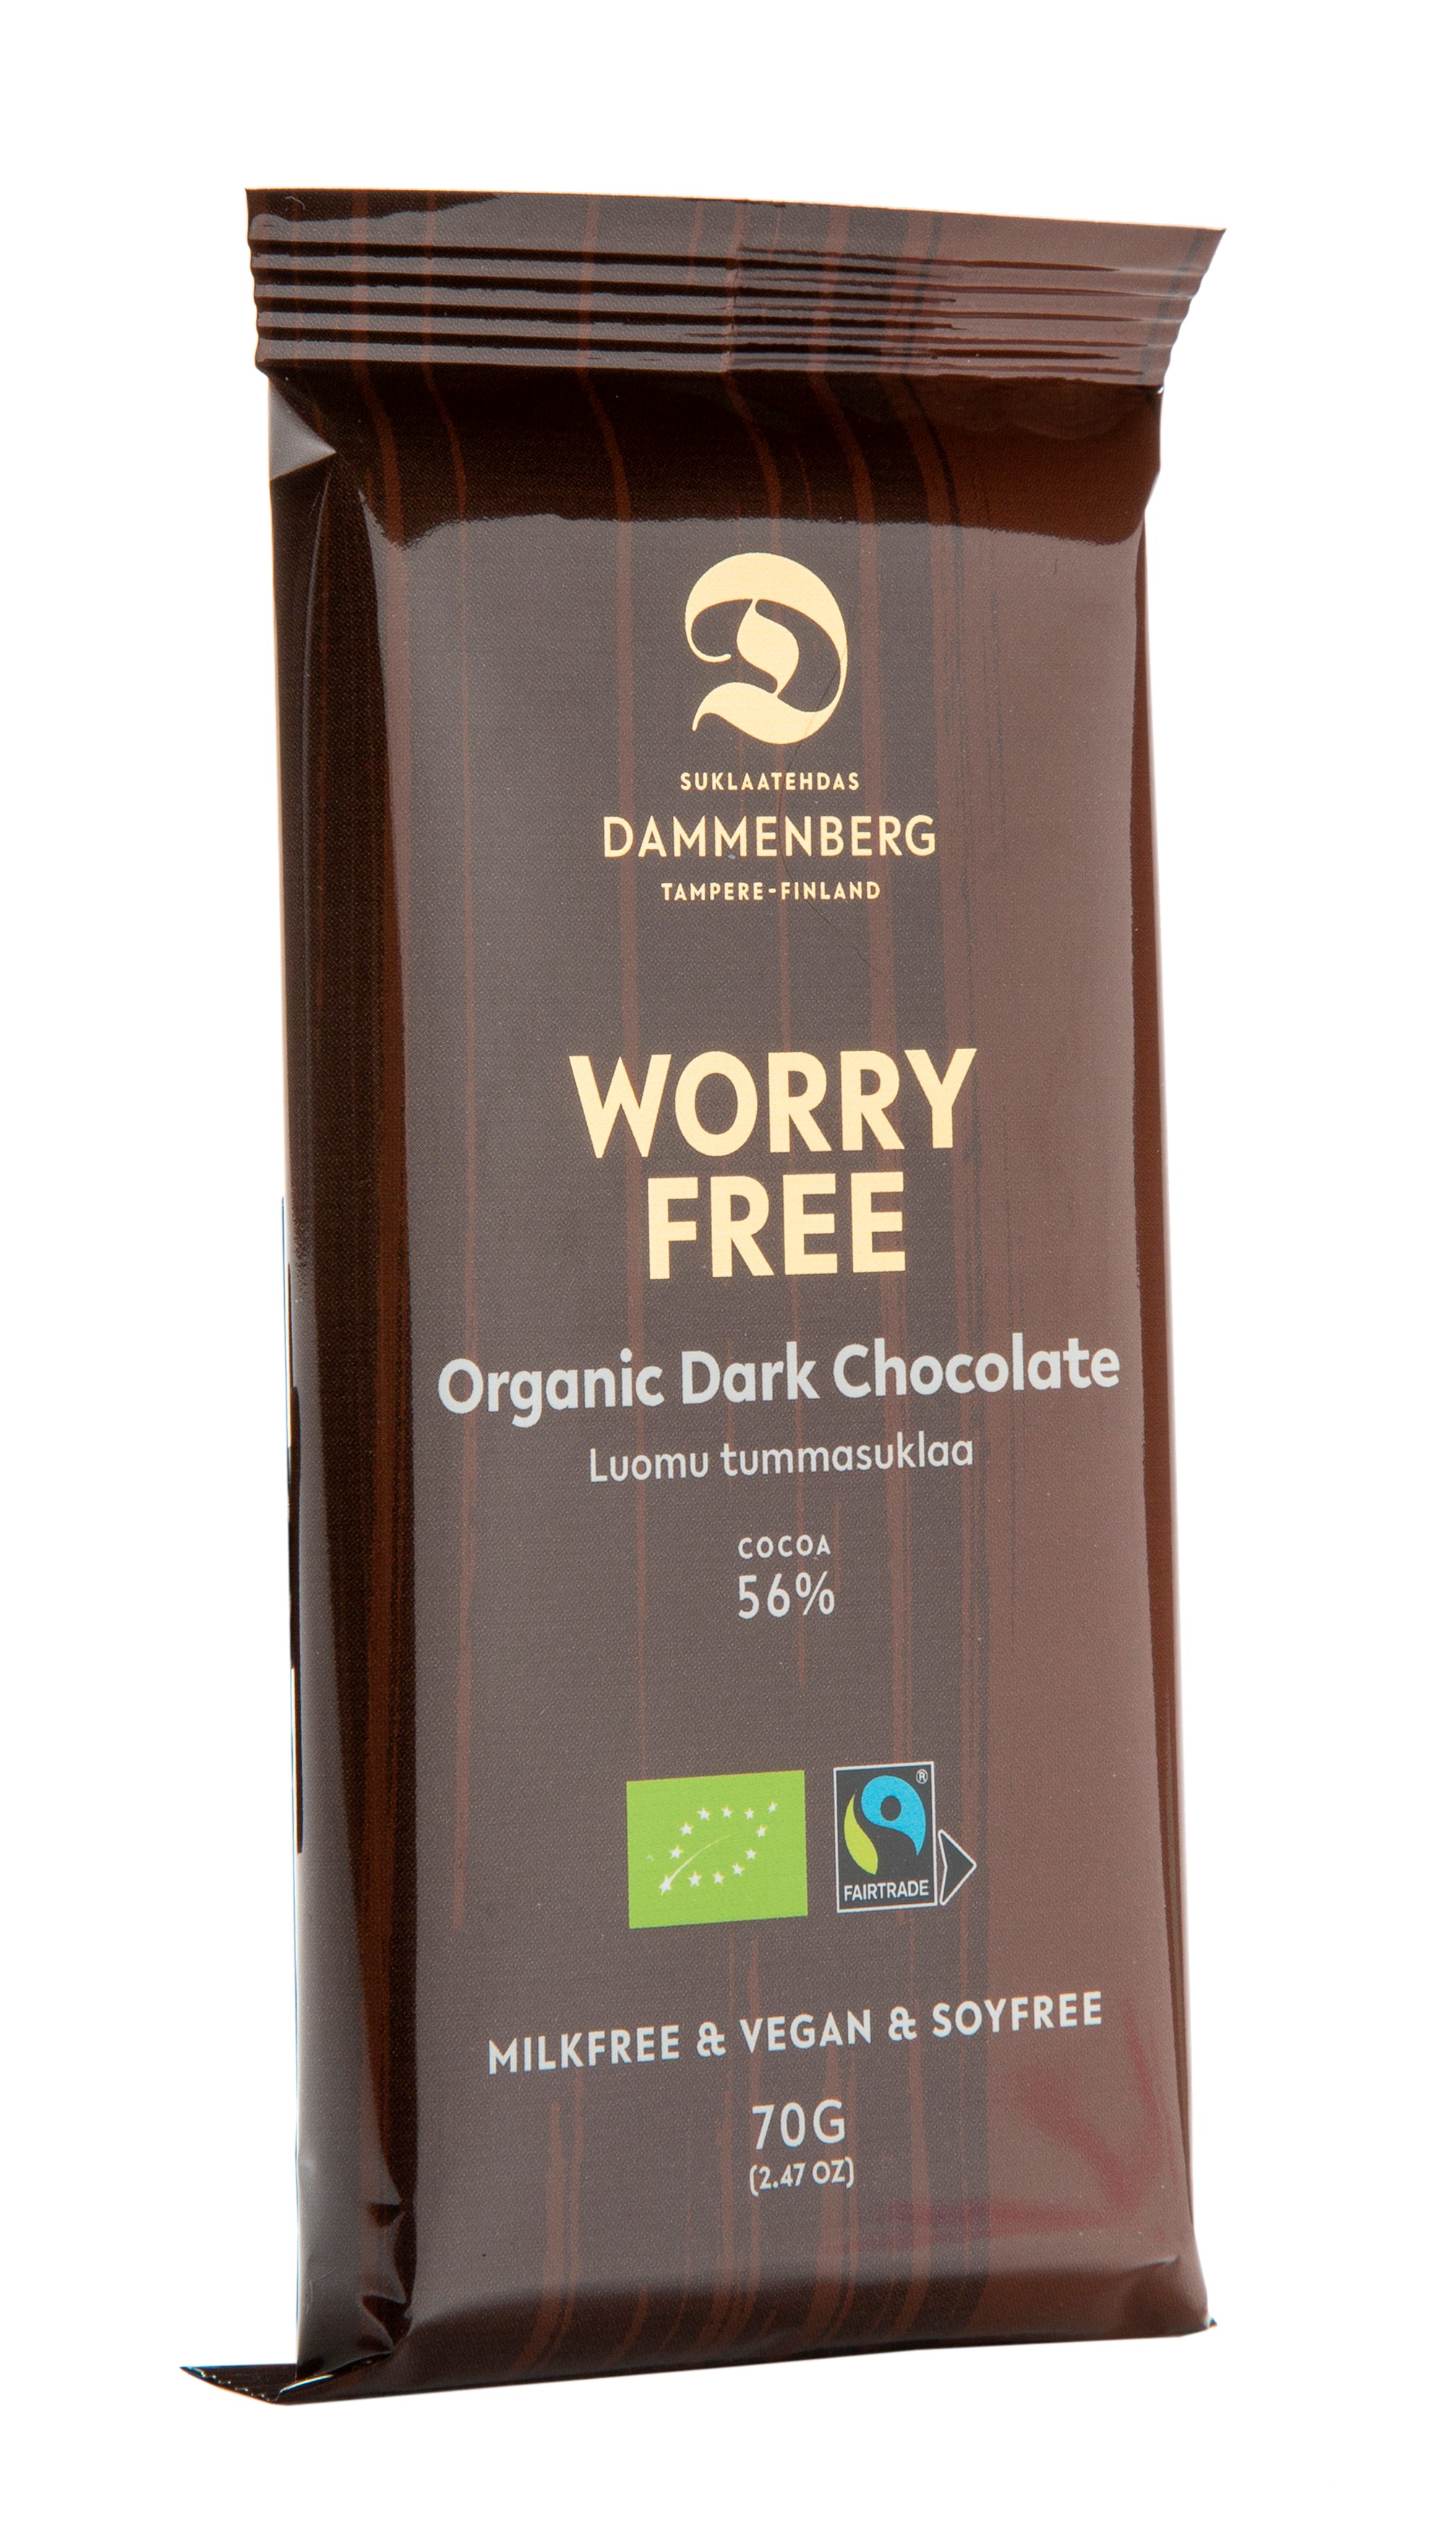 Dammenberg Worry free tummasuklaalevy 56%